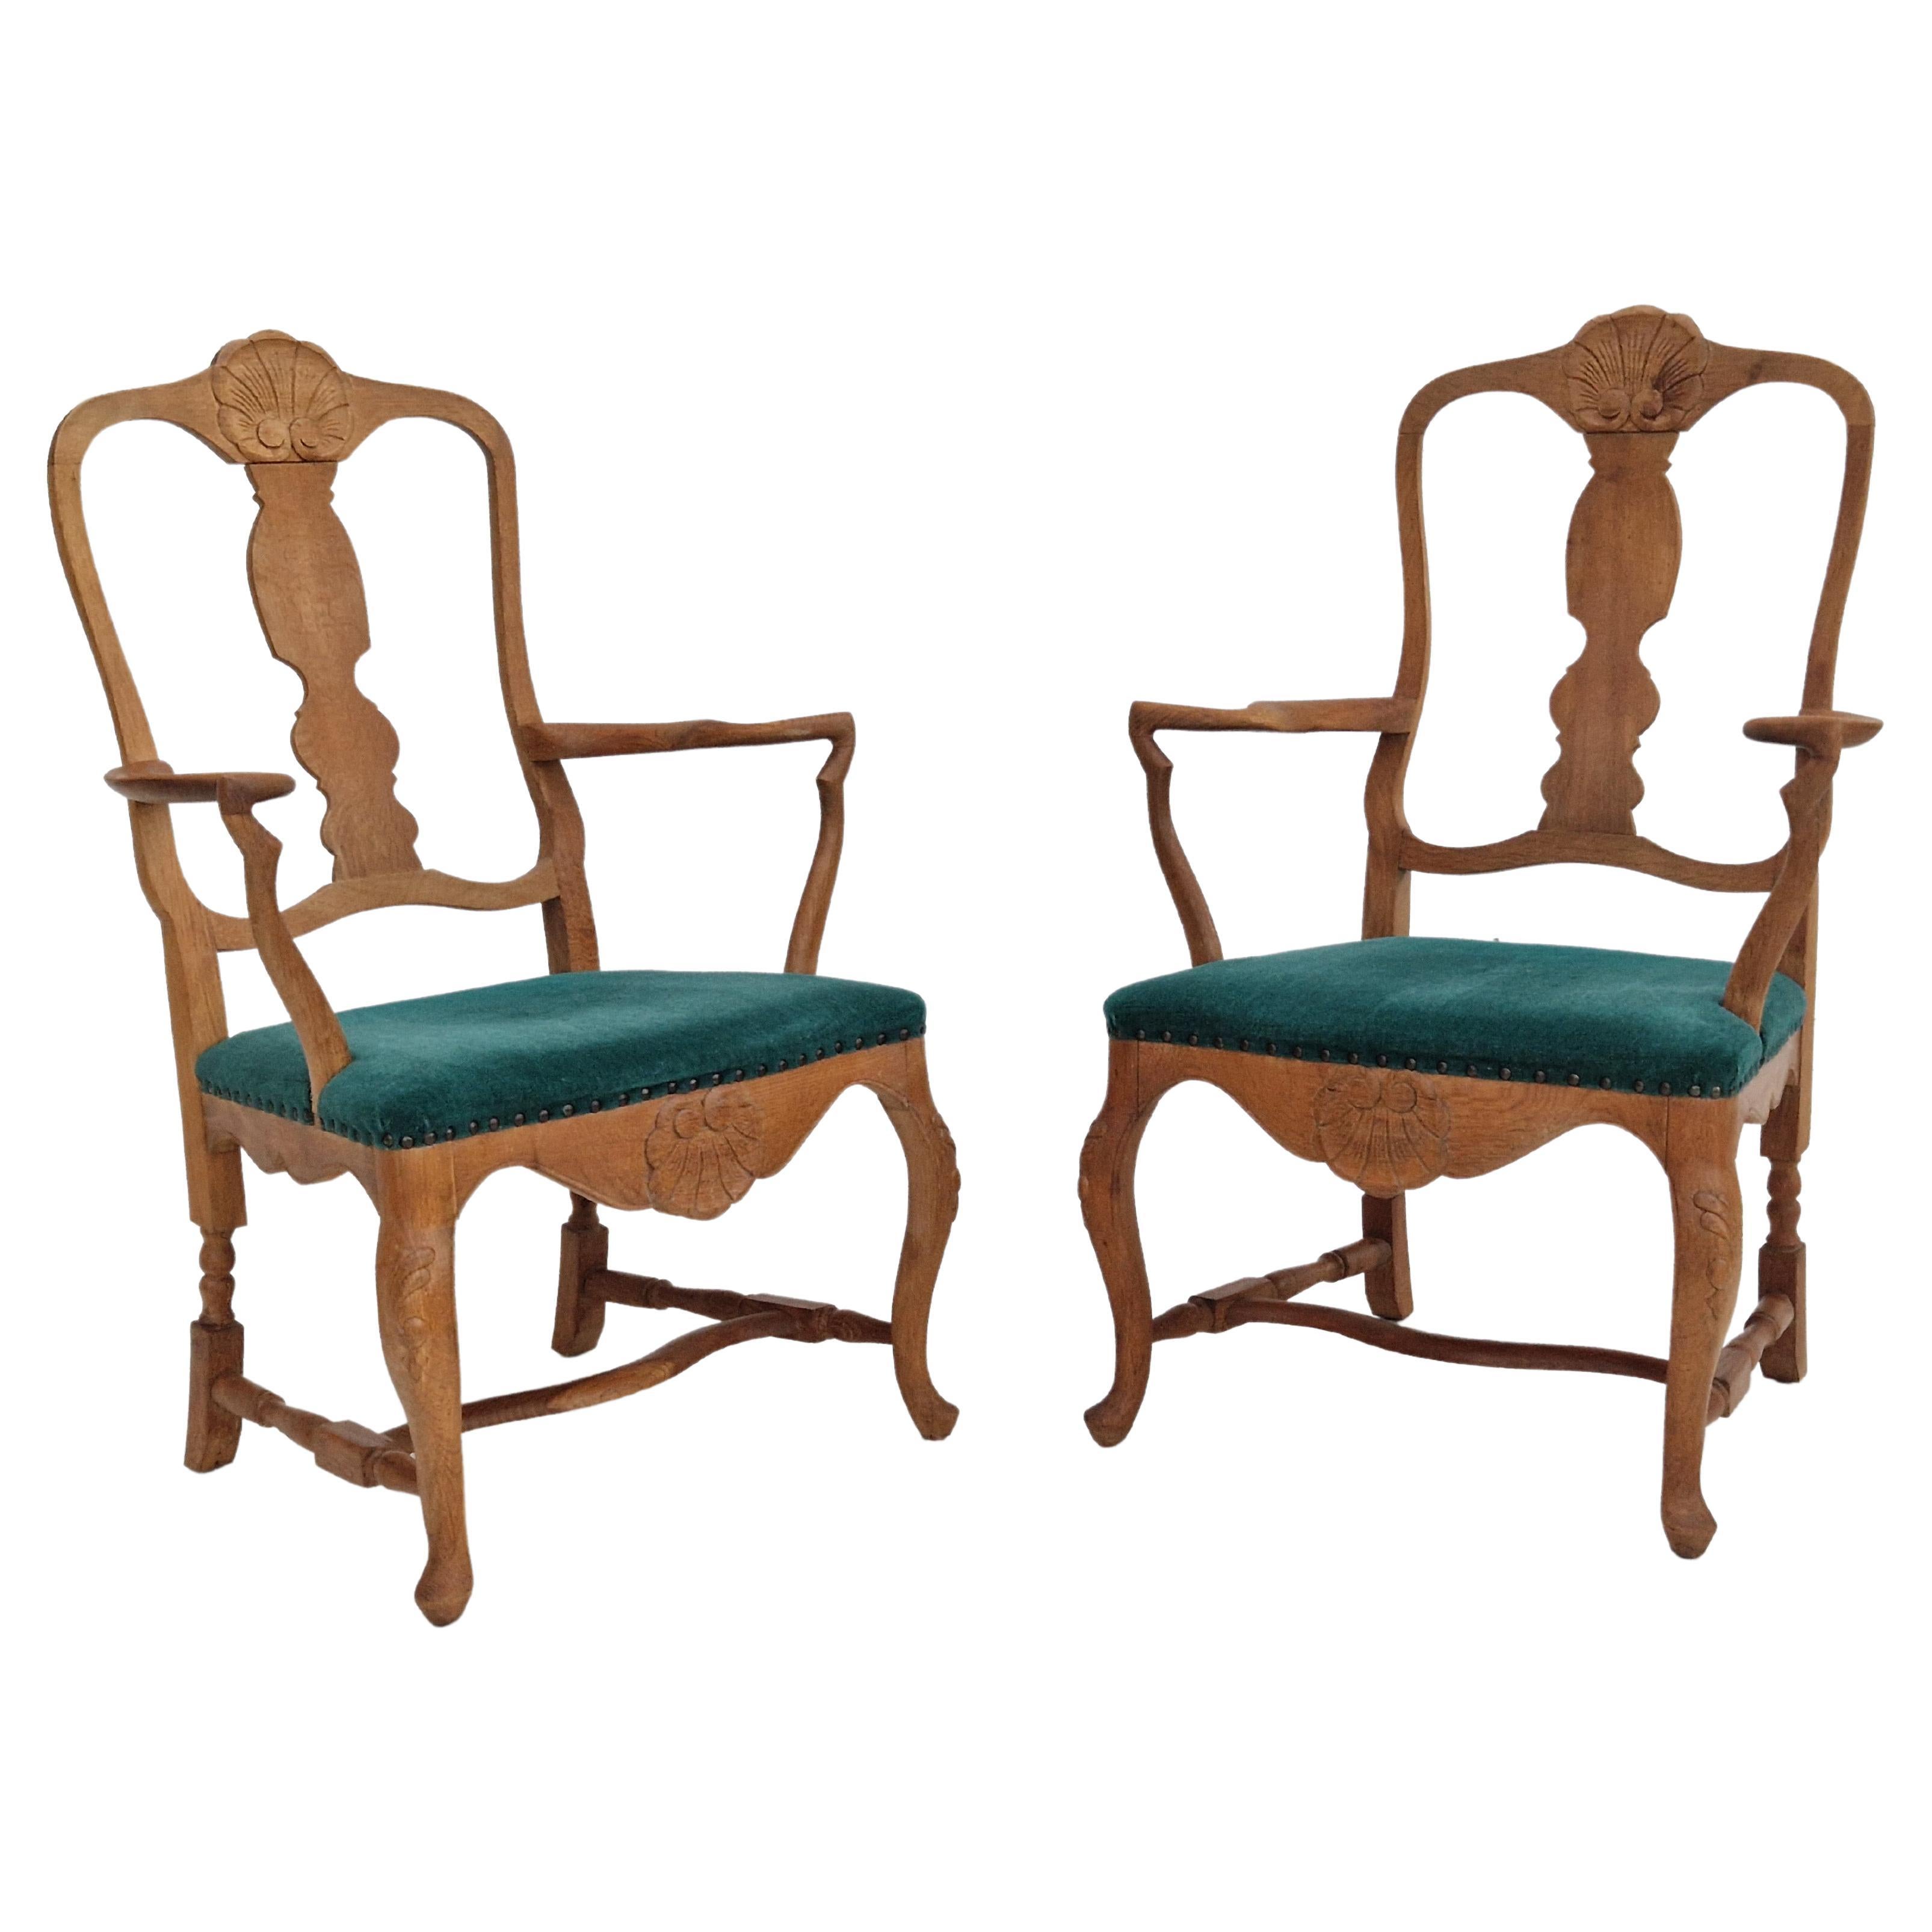 1960s, Danish Design, Pair of Armchairs, Oak Wood, Original Very Good Condition For Sale